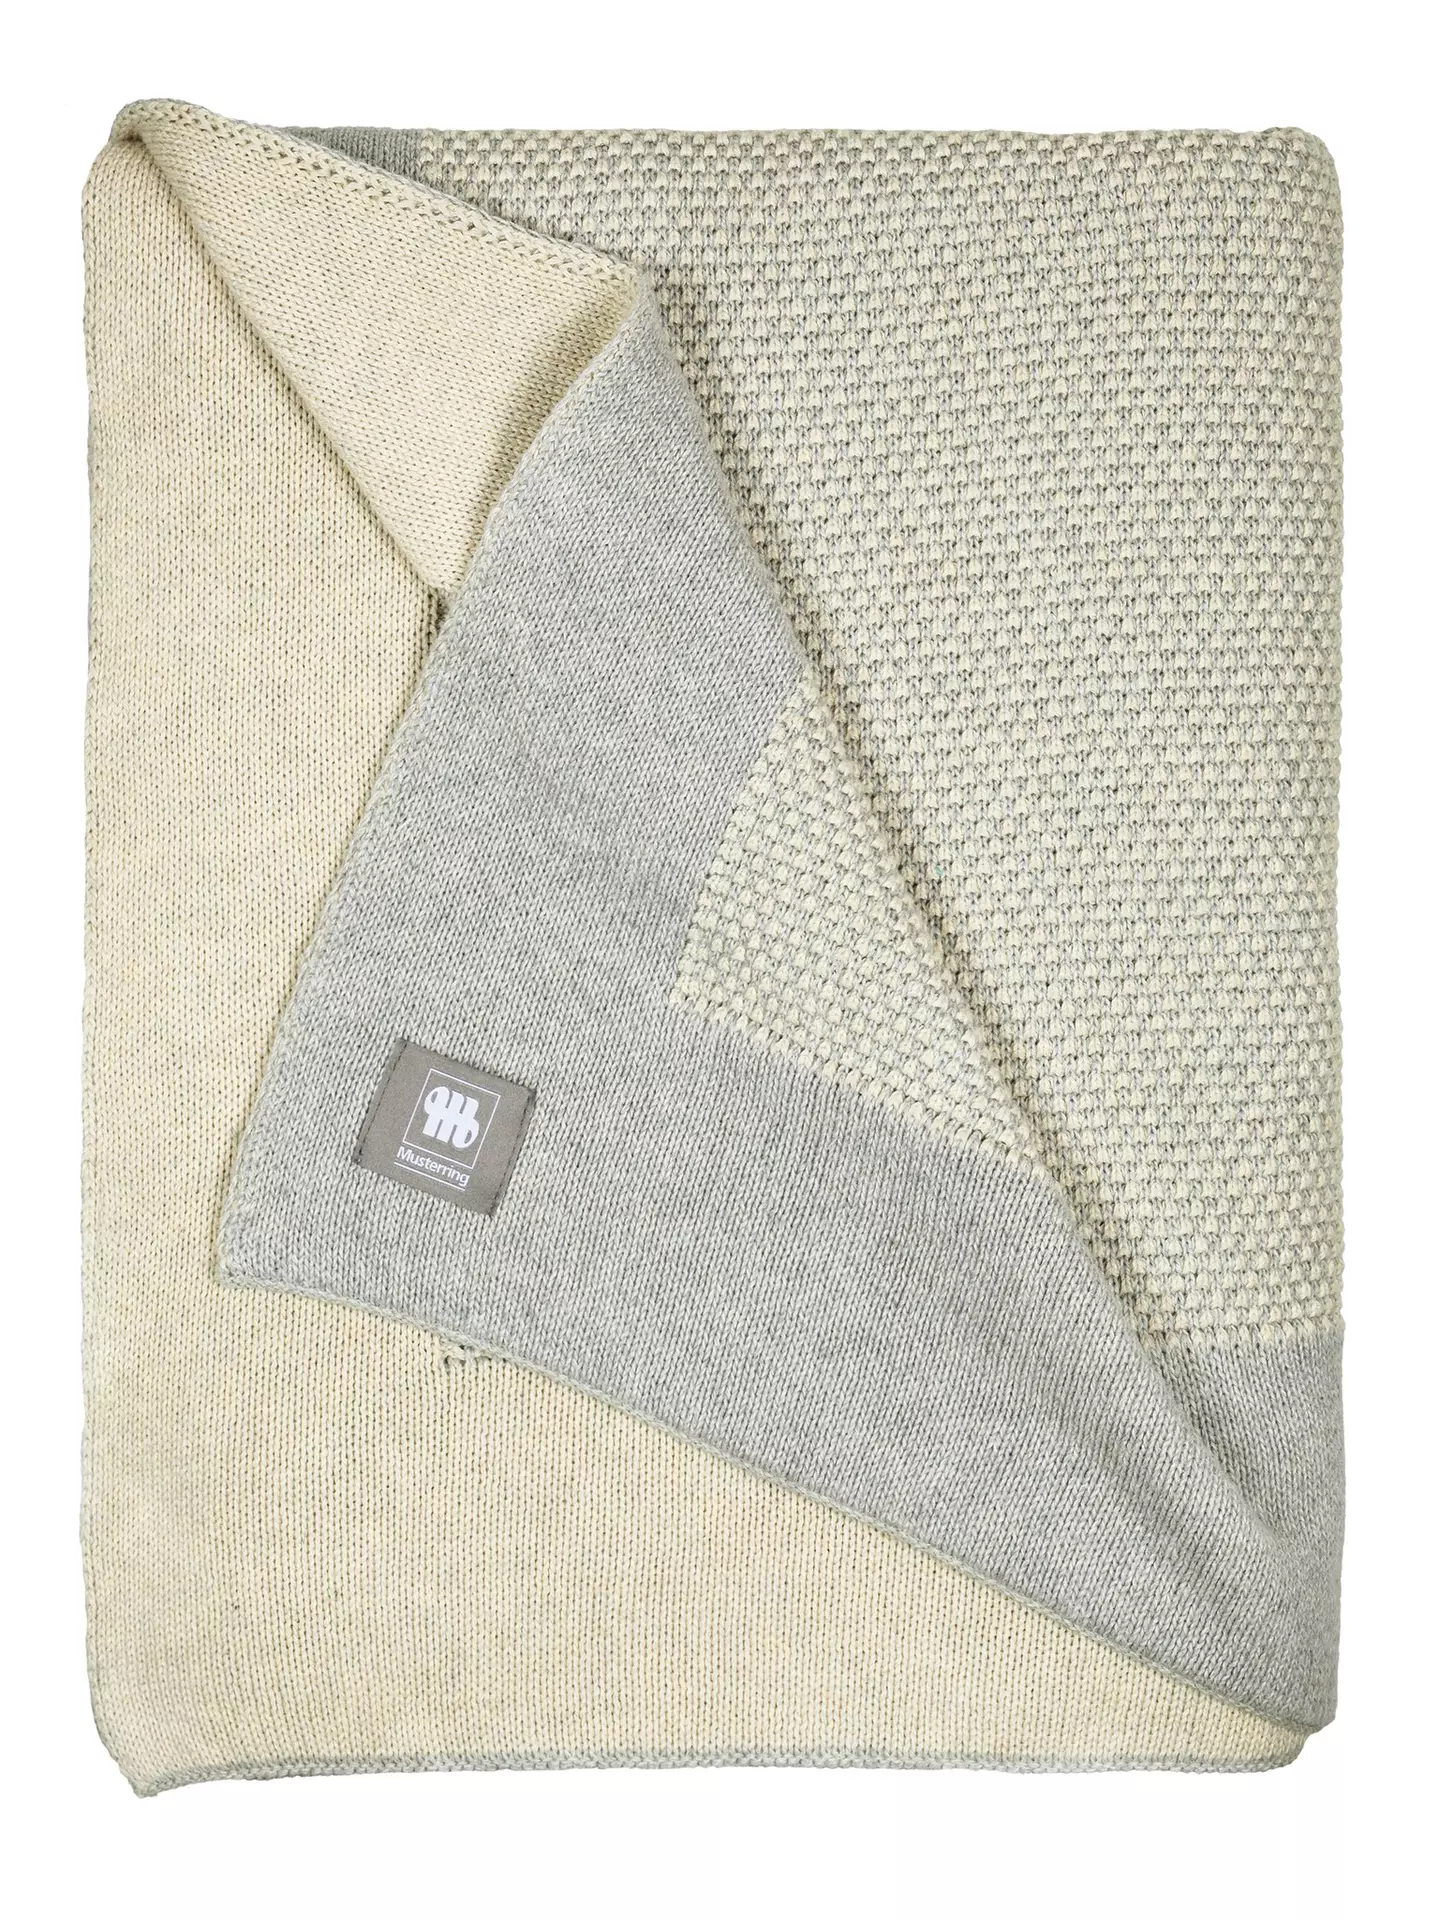 Strickdecke Knit Musterring Textil 130 x 170 cm